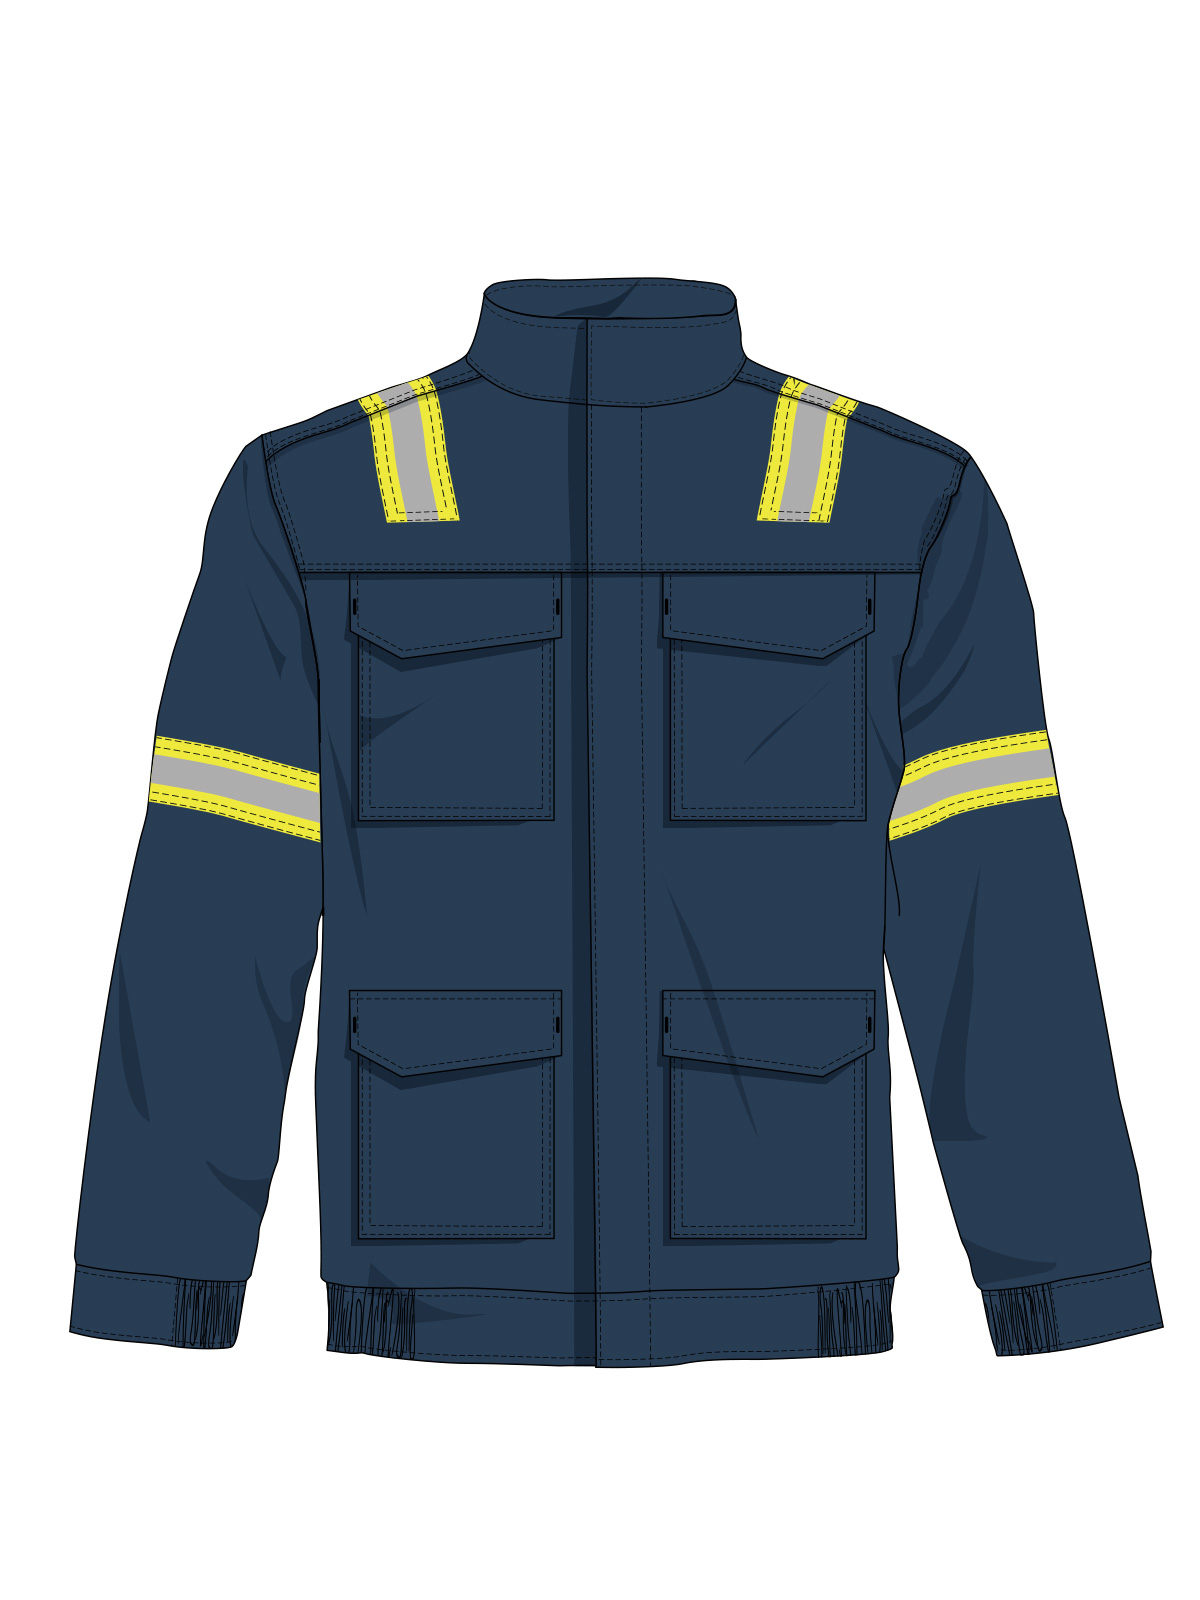 Secura Flame Resistant Jacket